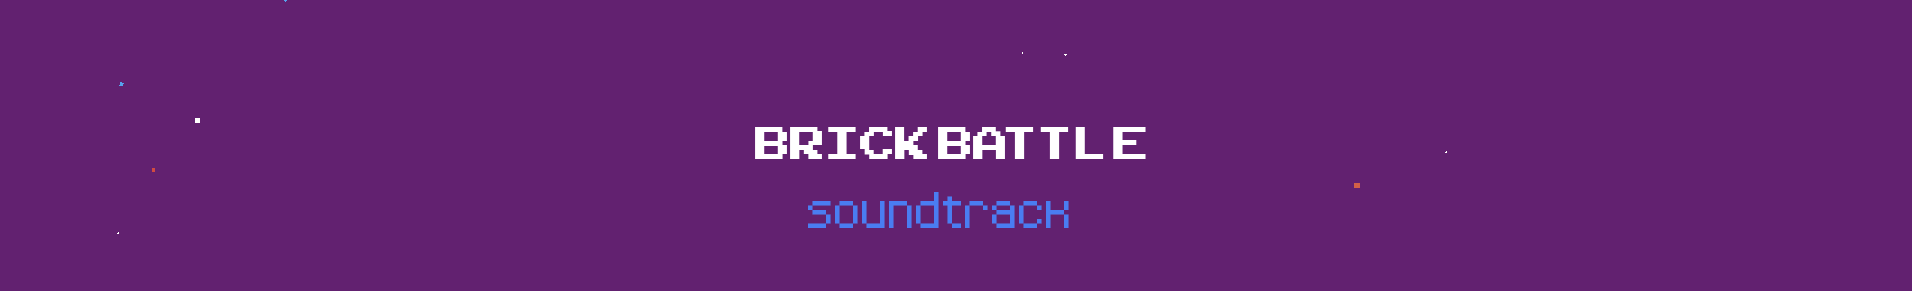 Brick Battle Soundtrack